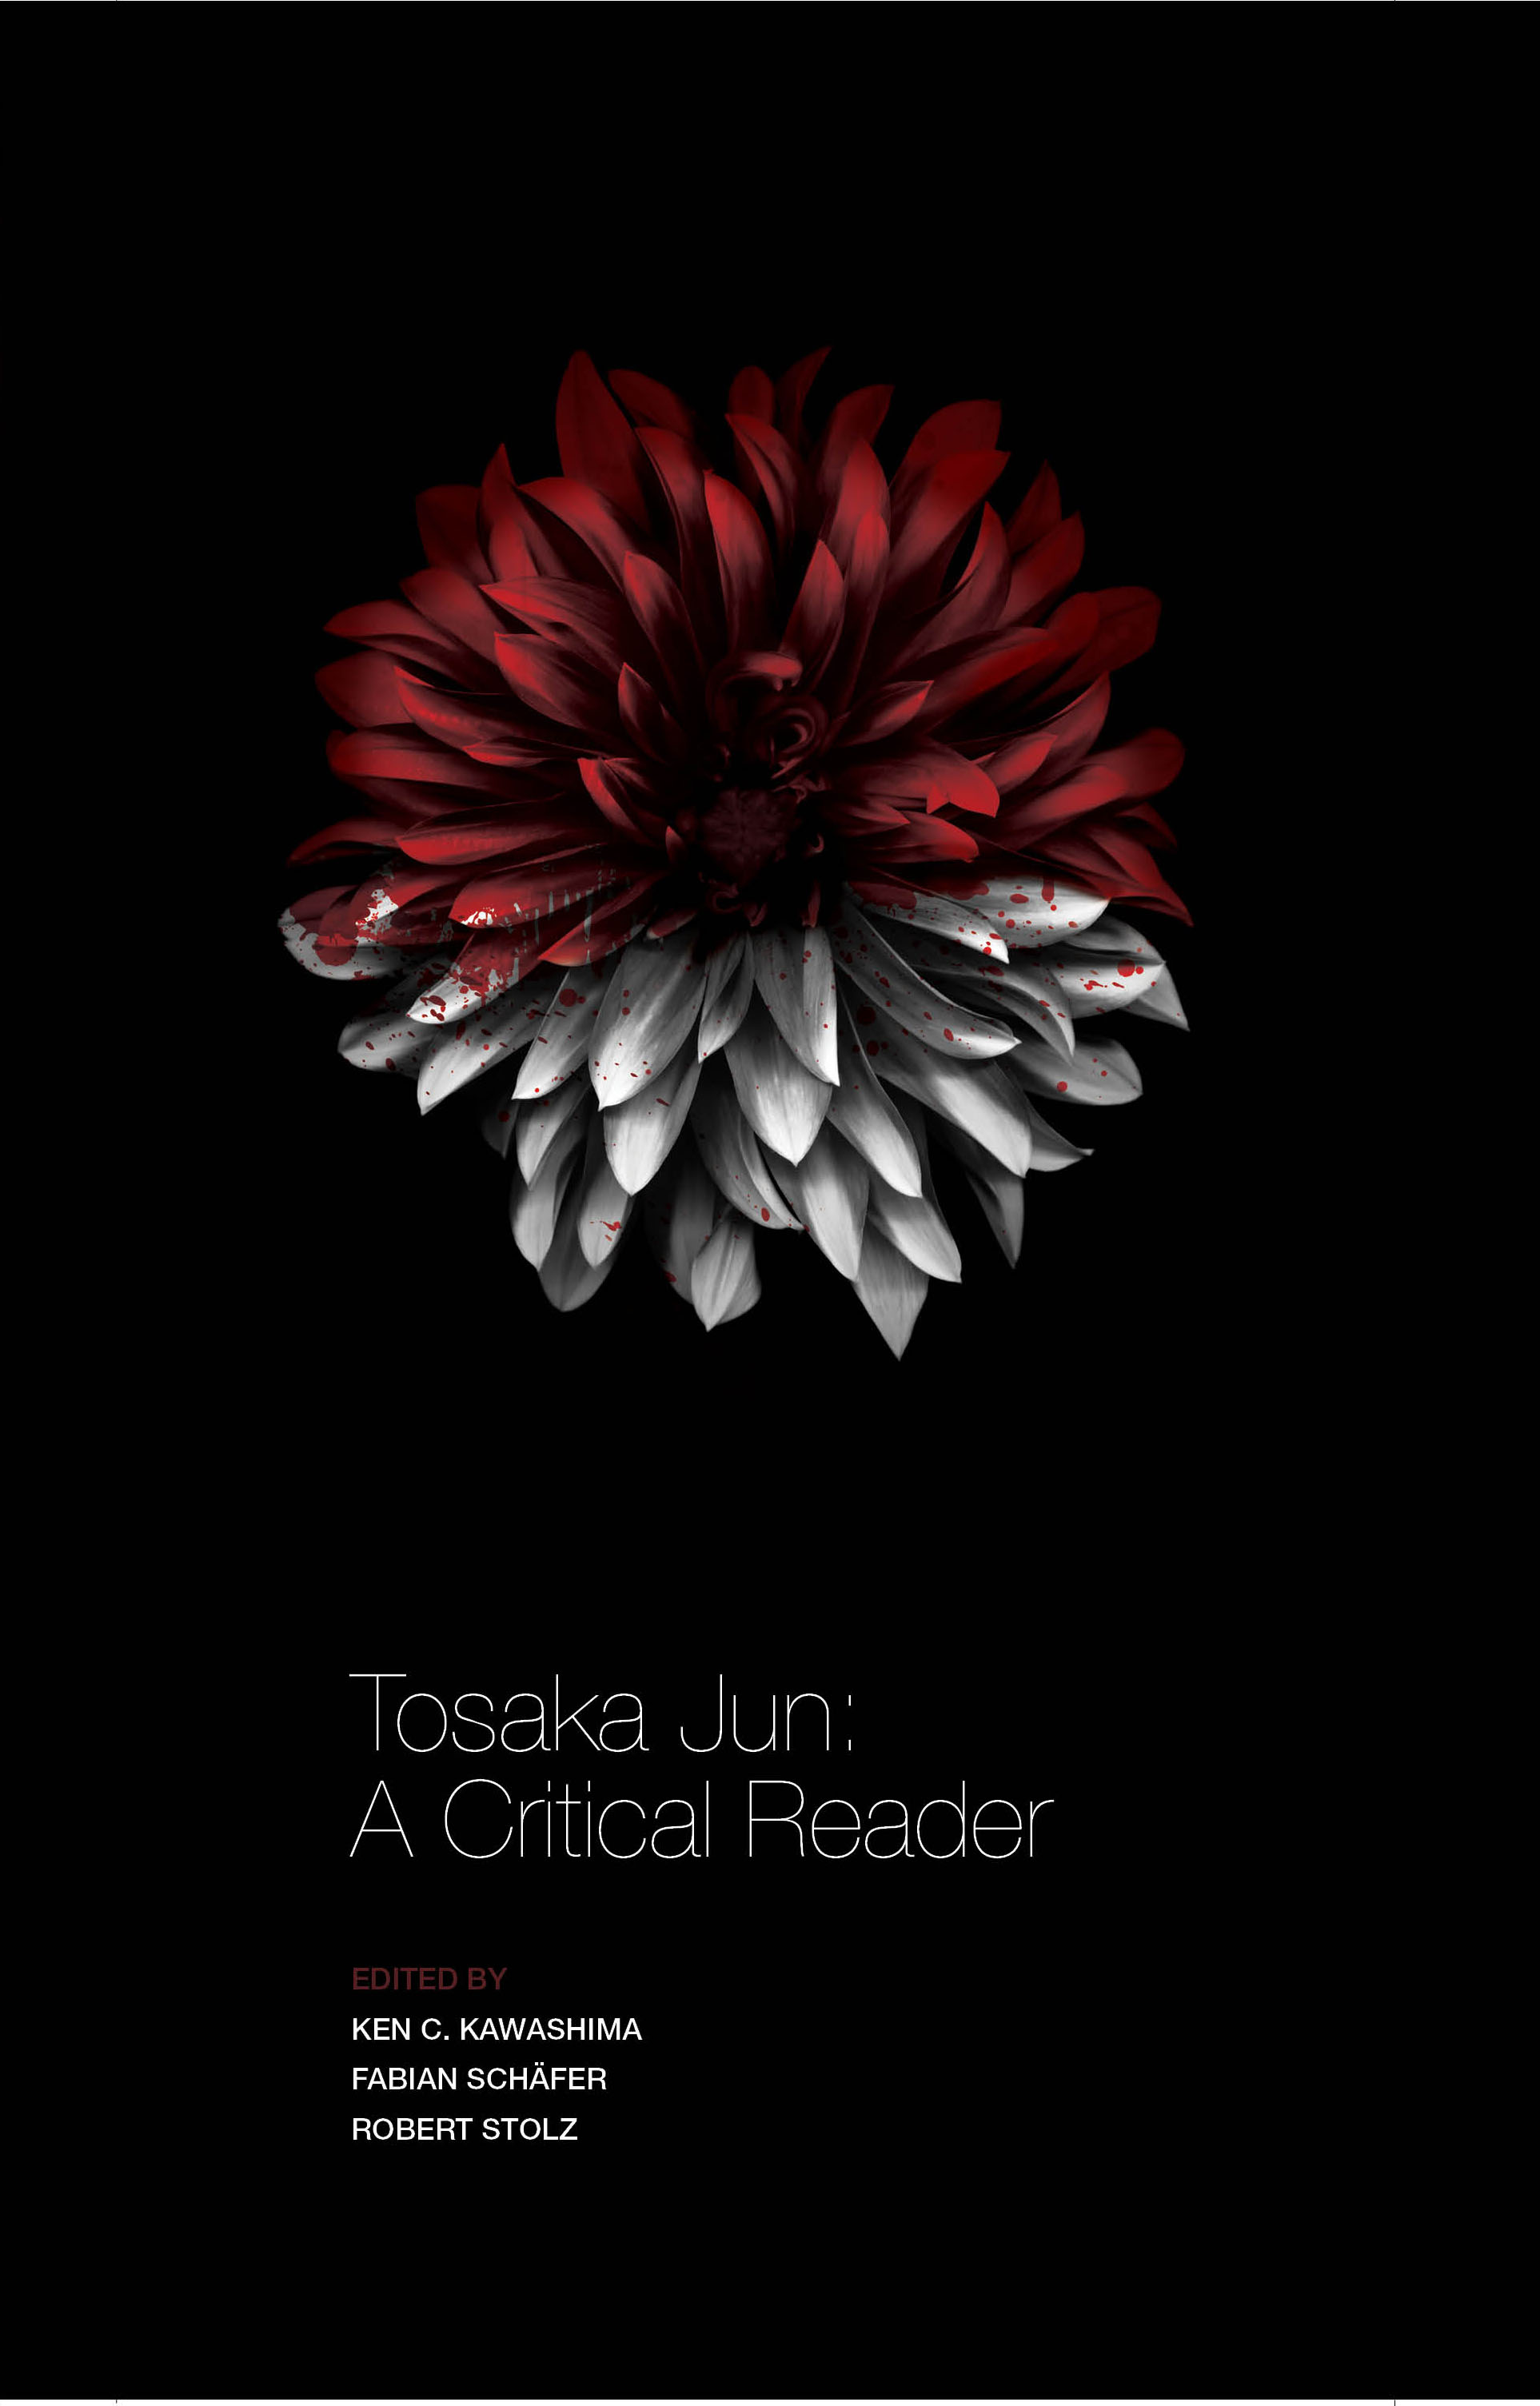 "Tosaka Jun: A Critical Reader" book cover.